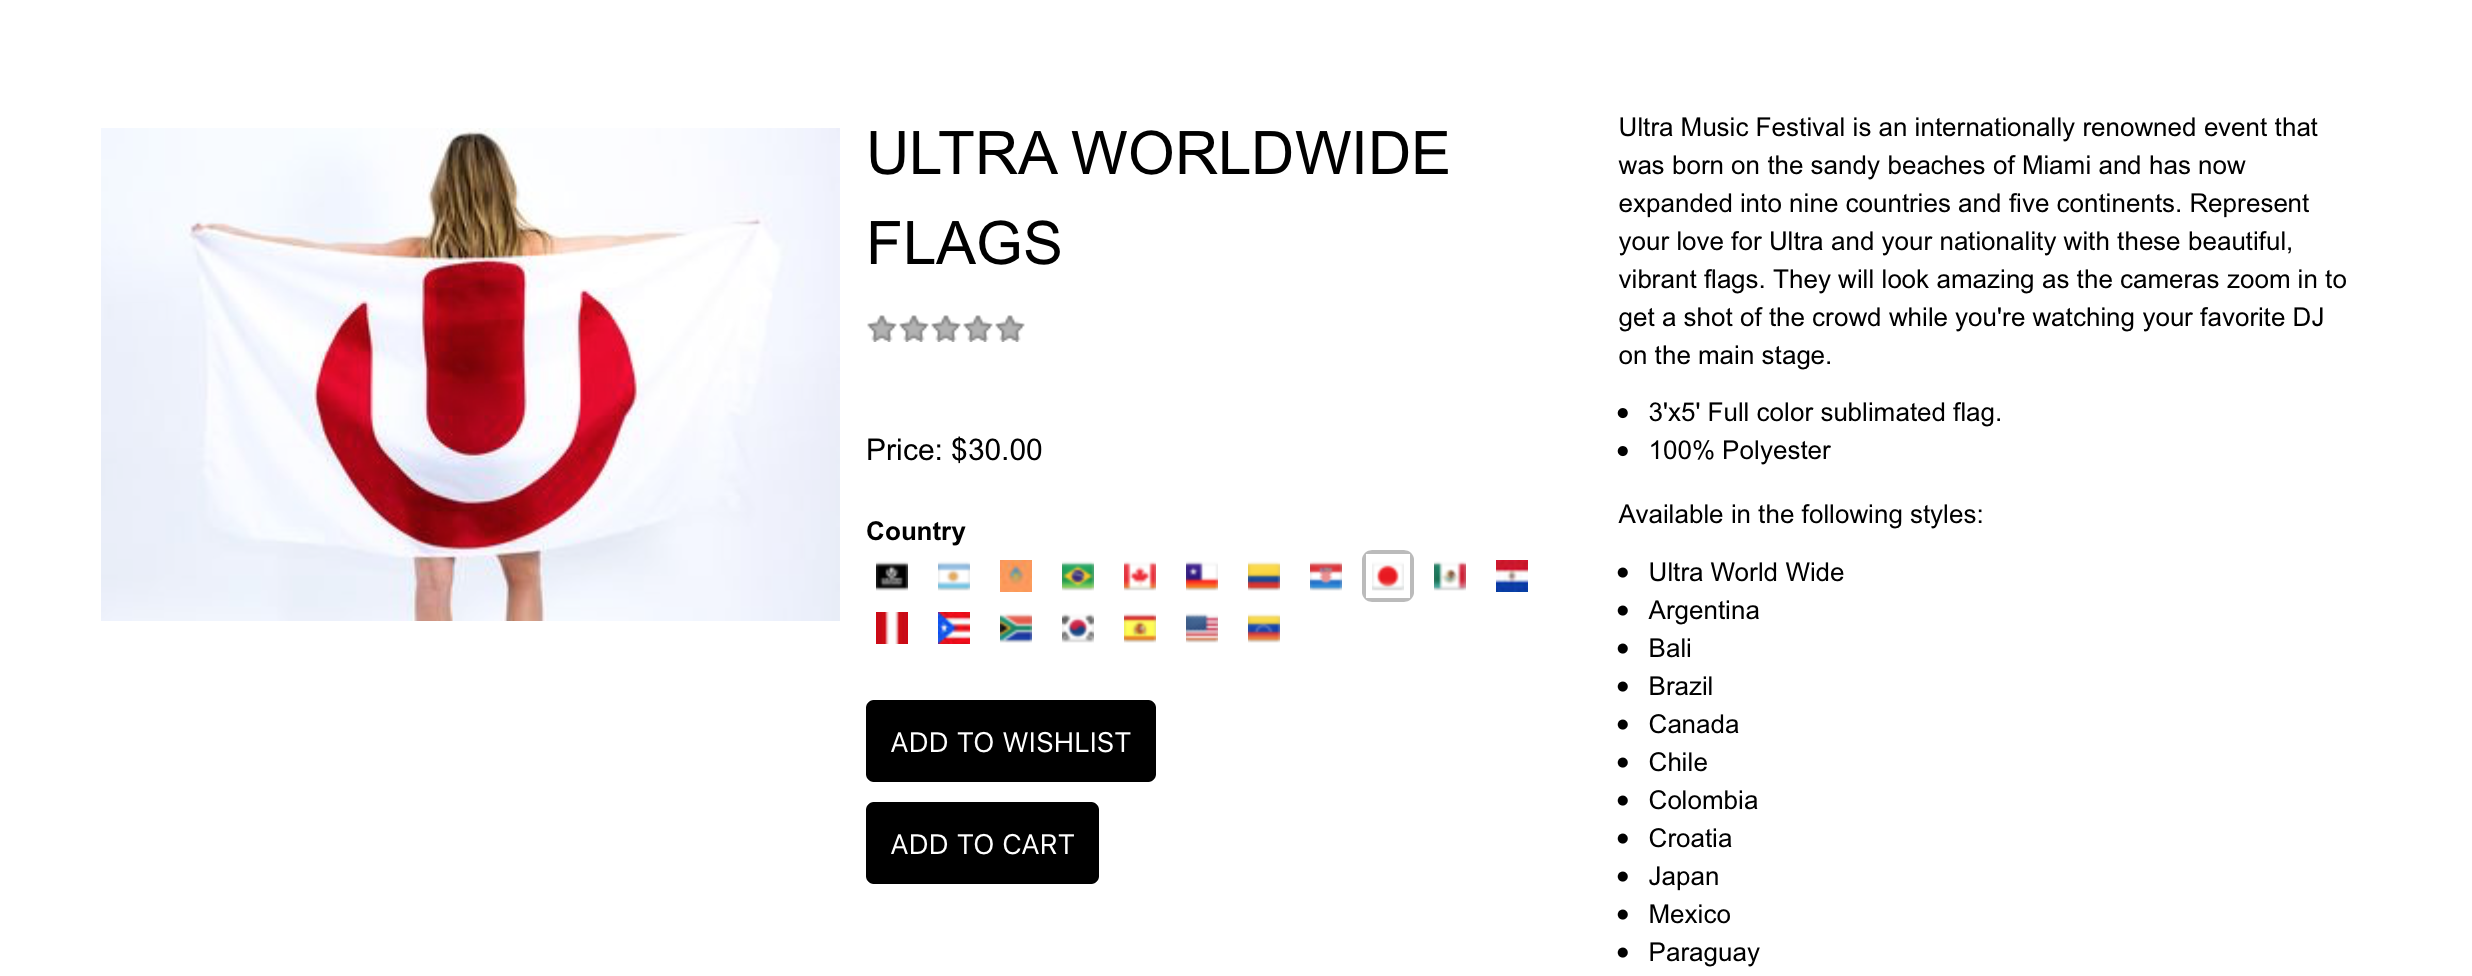 ULTRA WORLDWIDE FLAGS